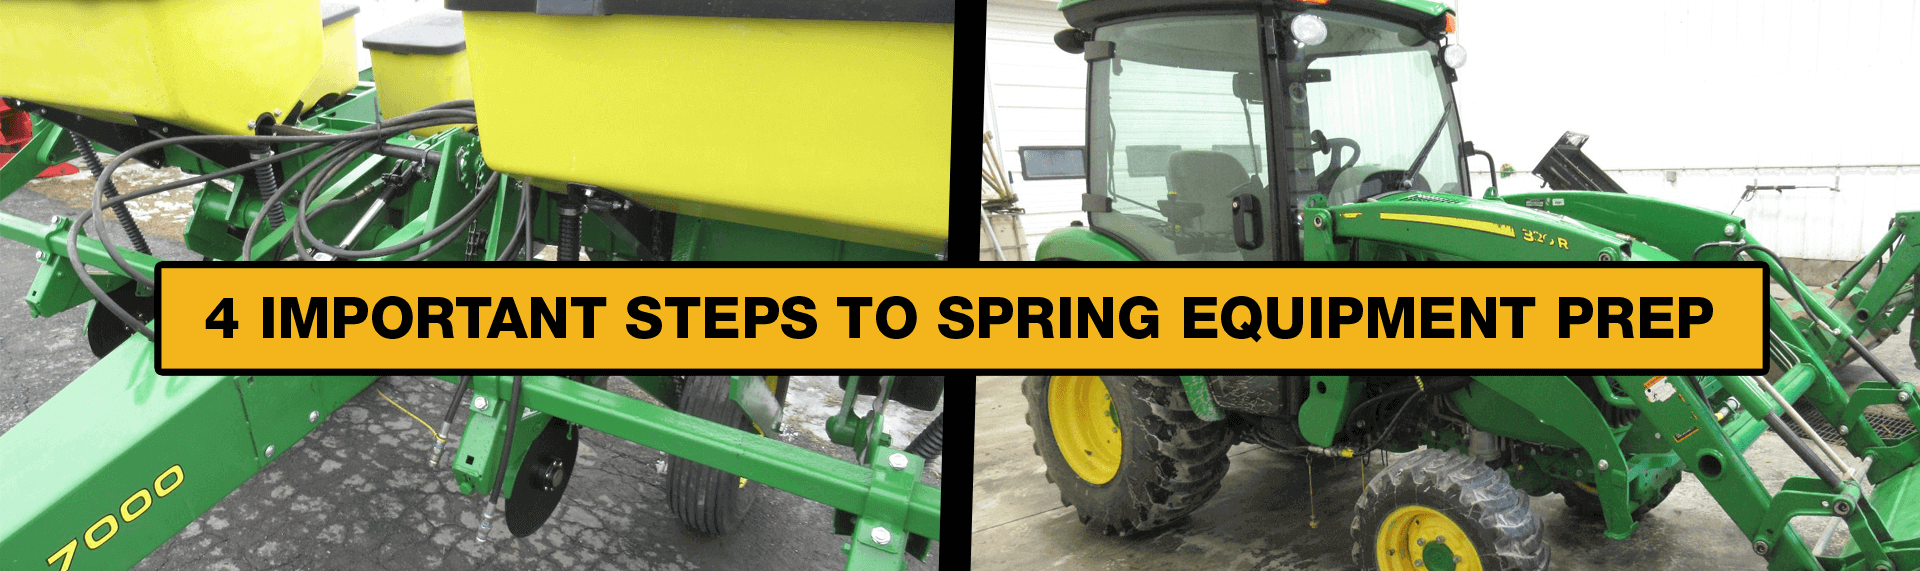 spring equipment preparation